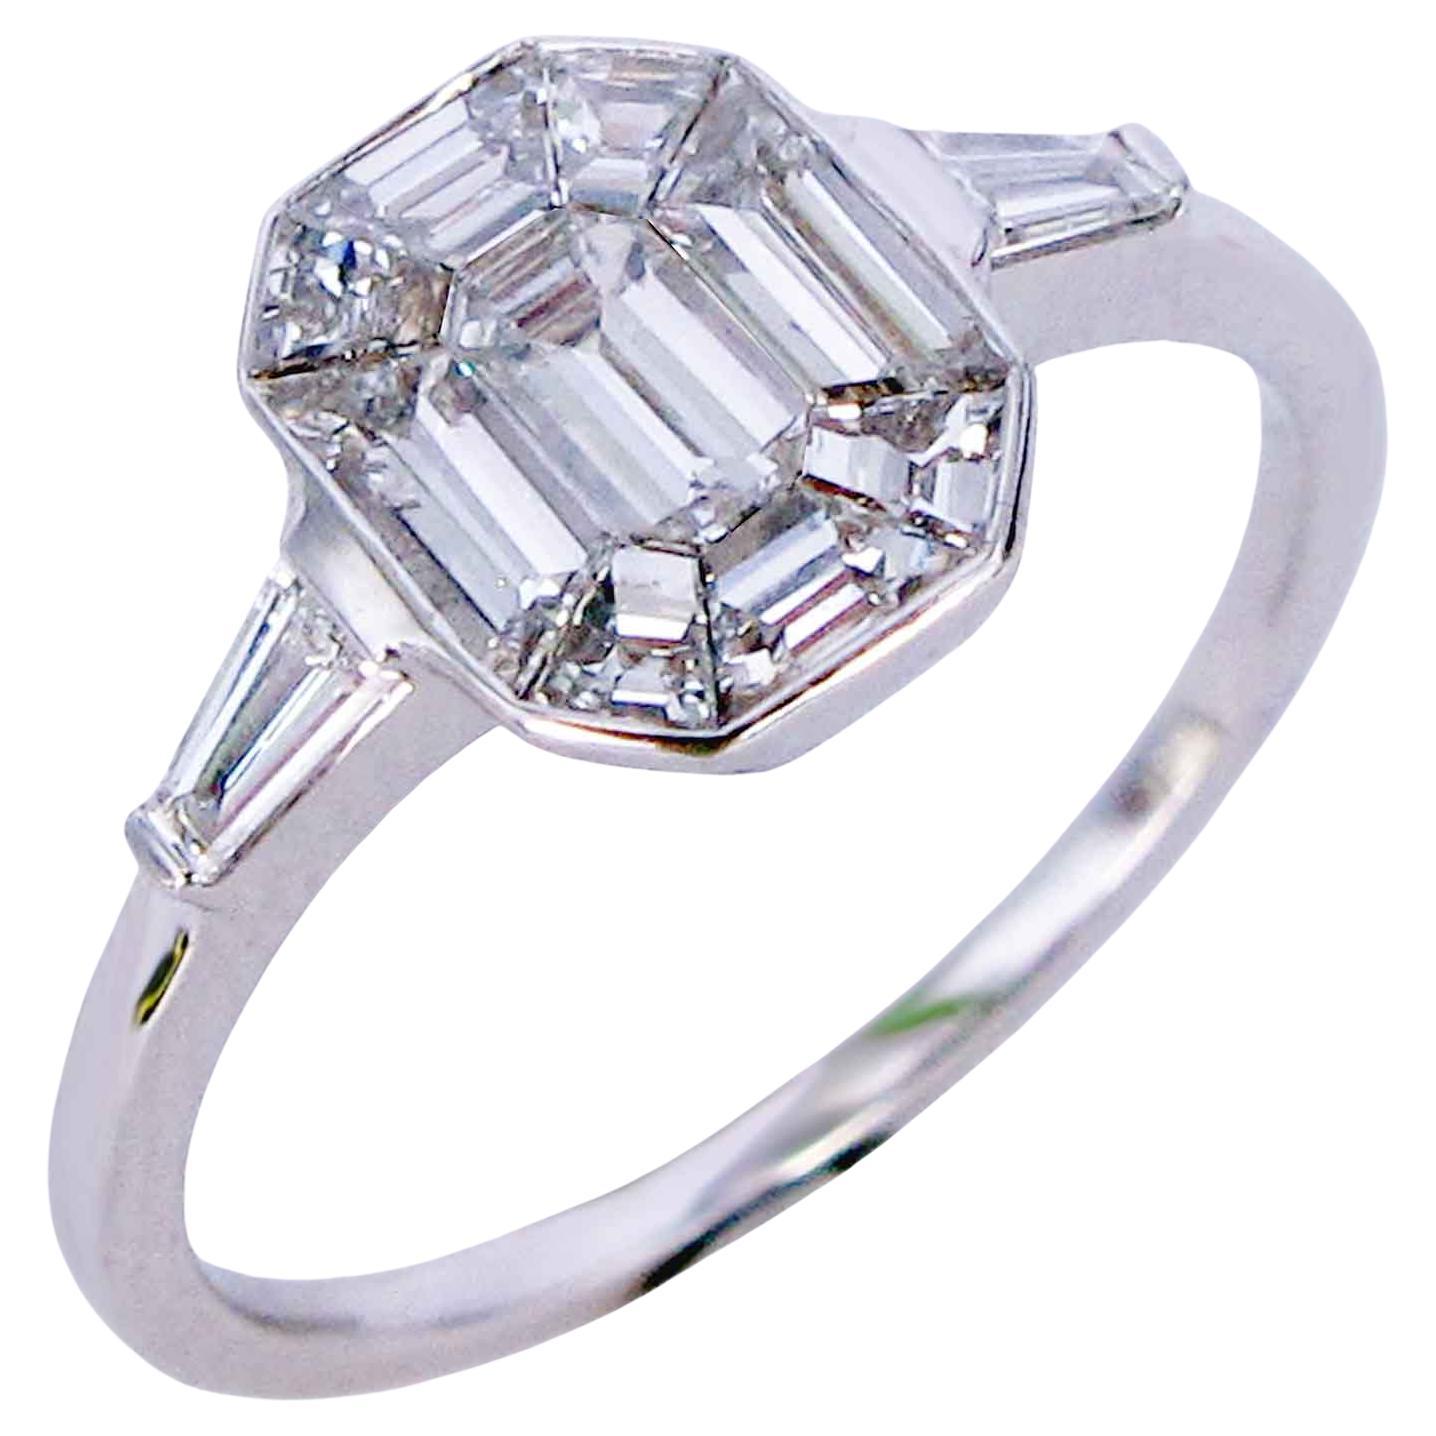 3 Carat face up Emerald shape Piecut diamond ring